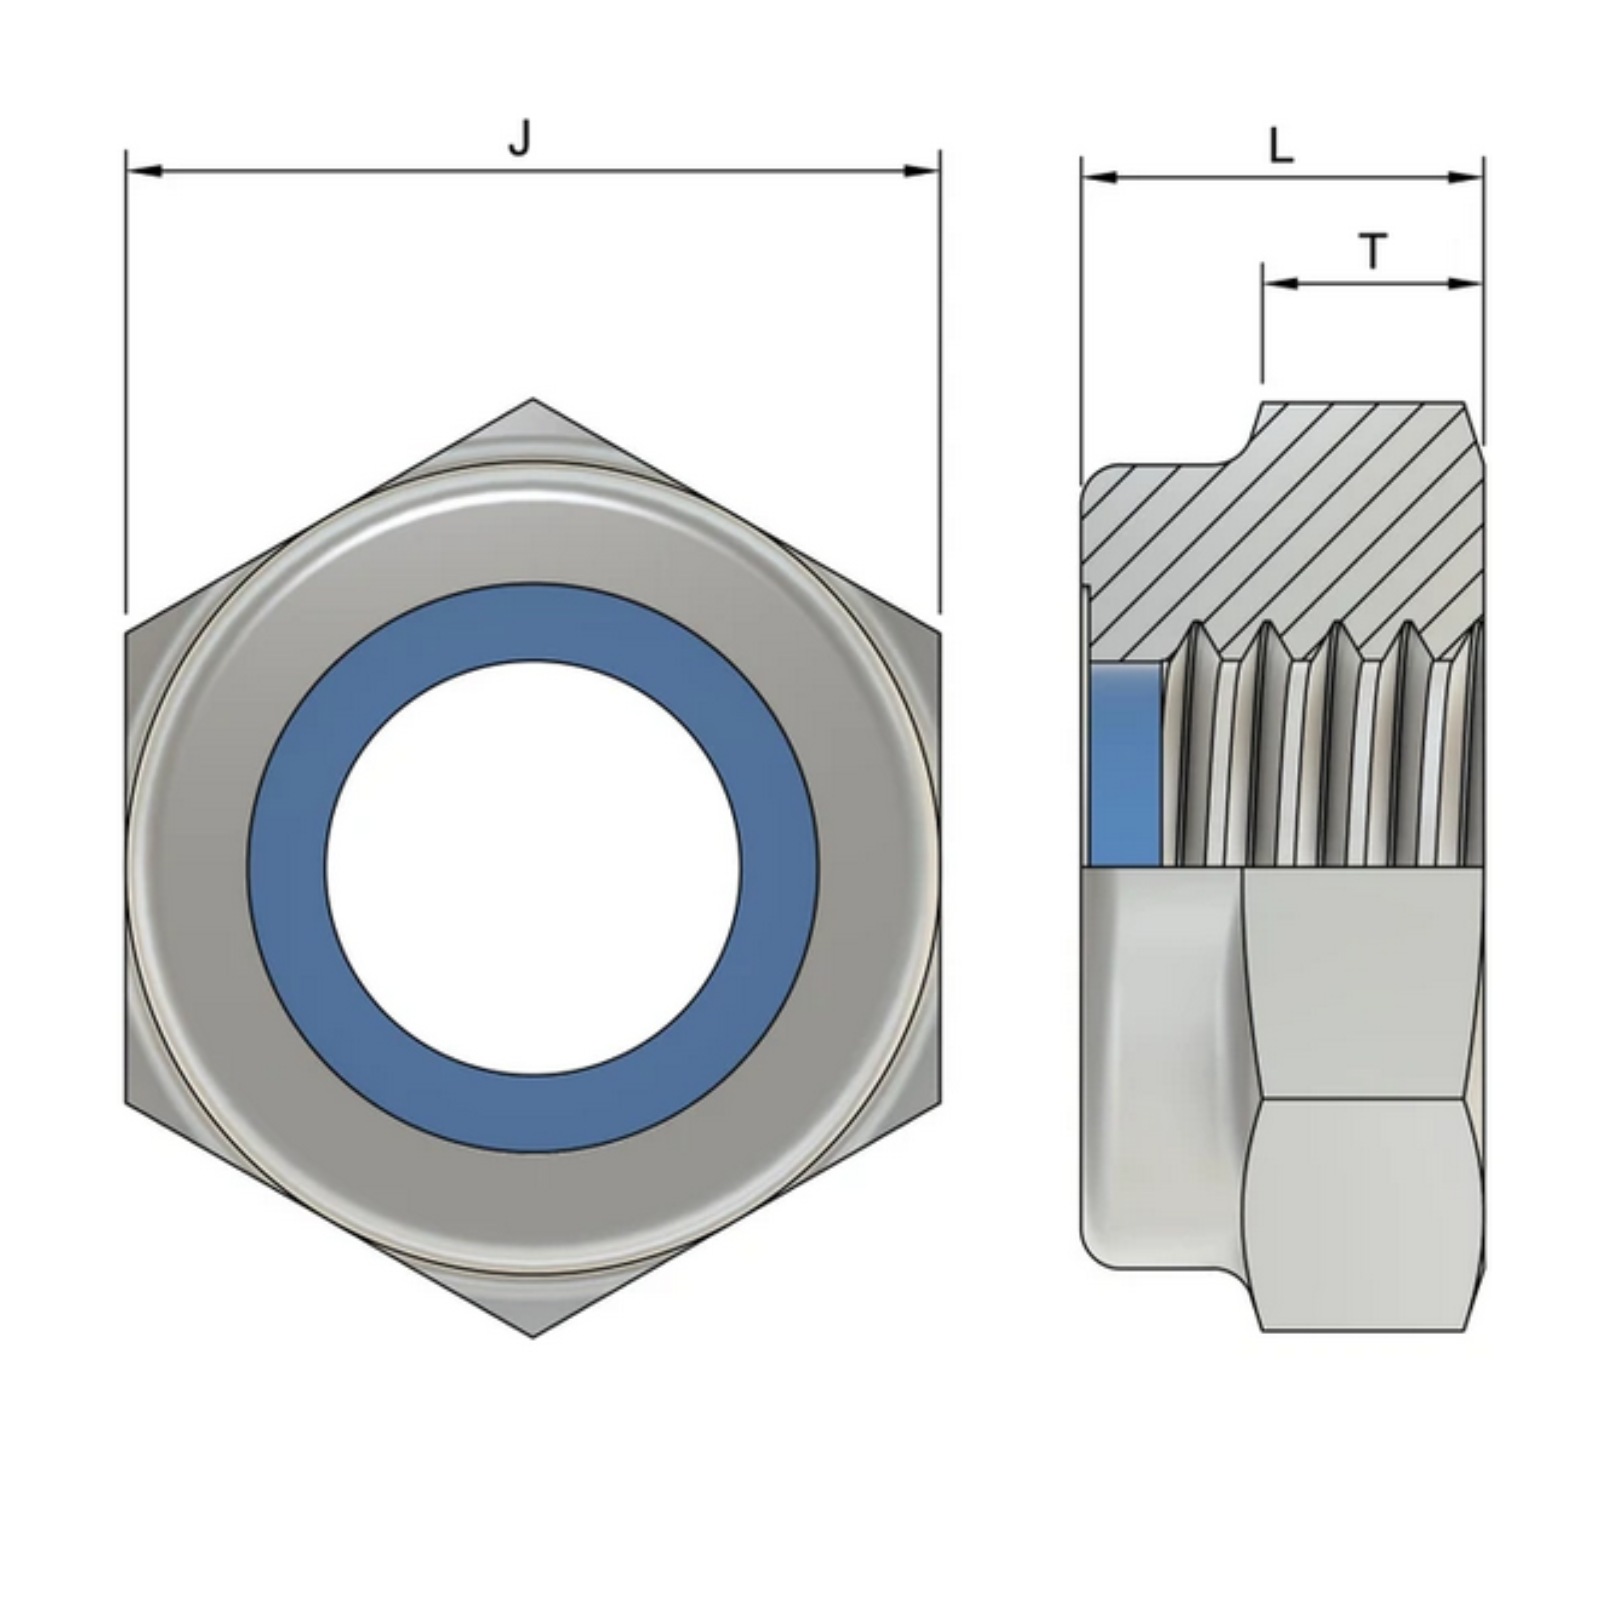 M6 Hexagon Nylon Locking Nuts (DIN 985) - Zinc Plated Steel